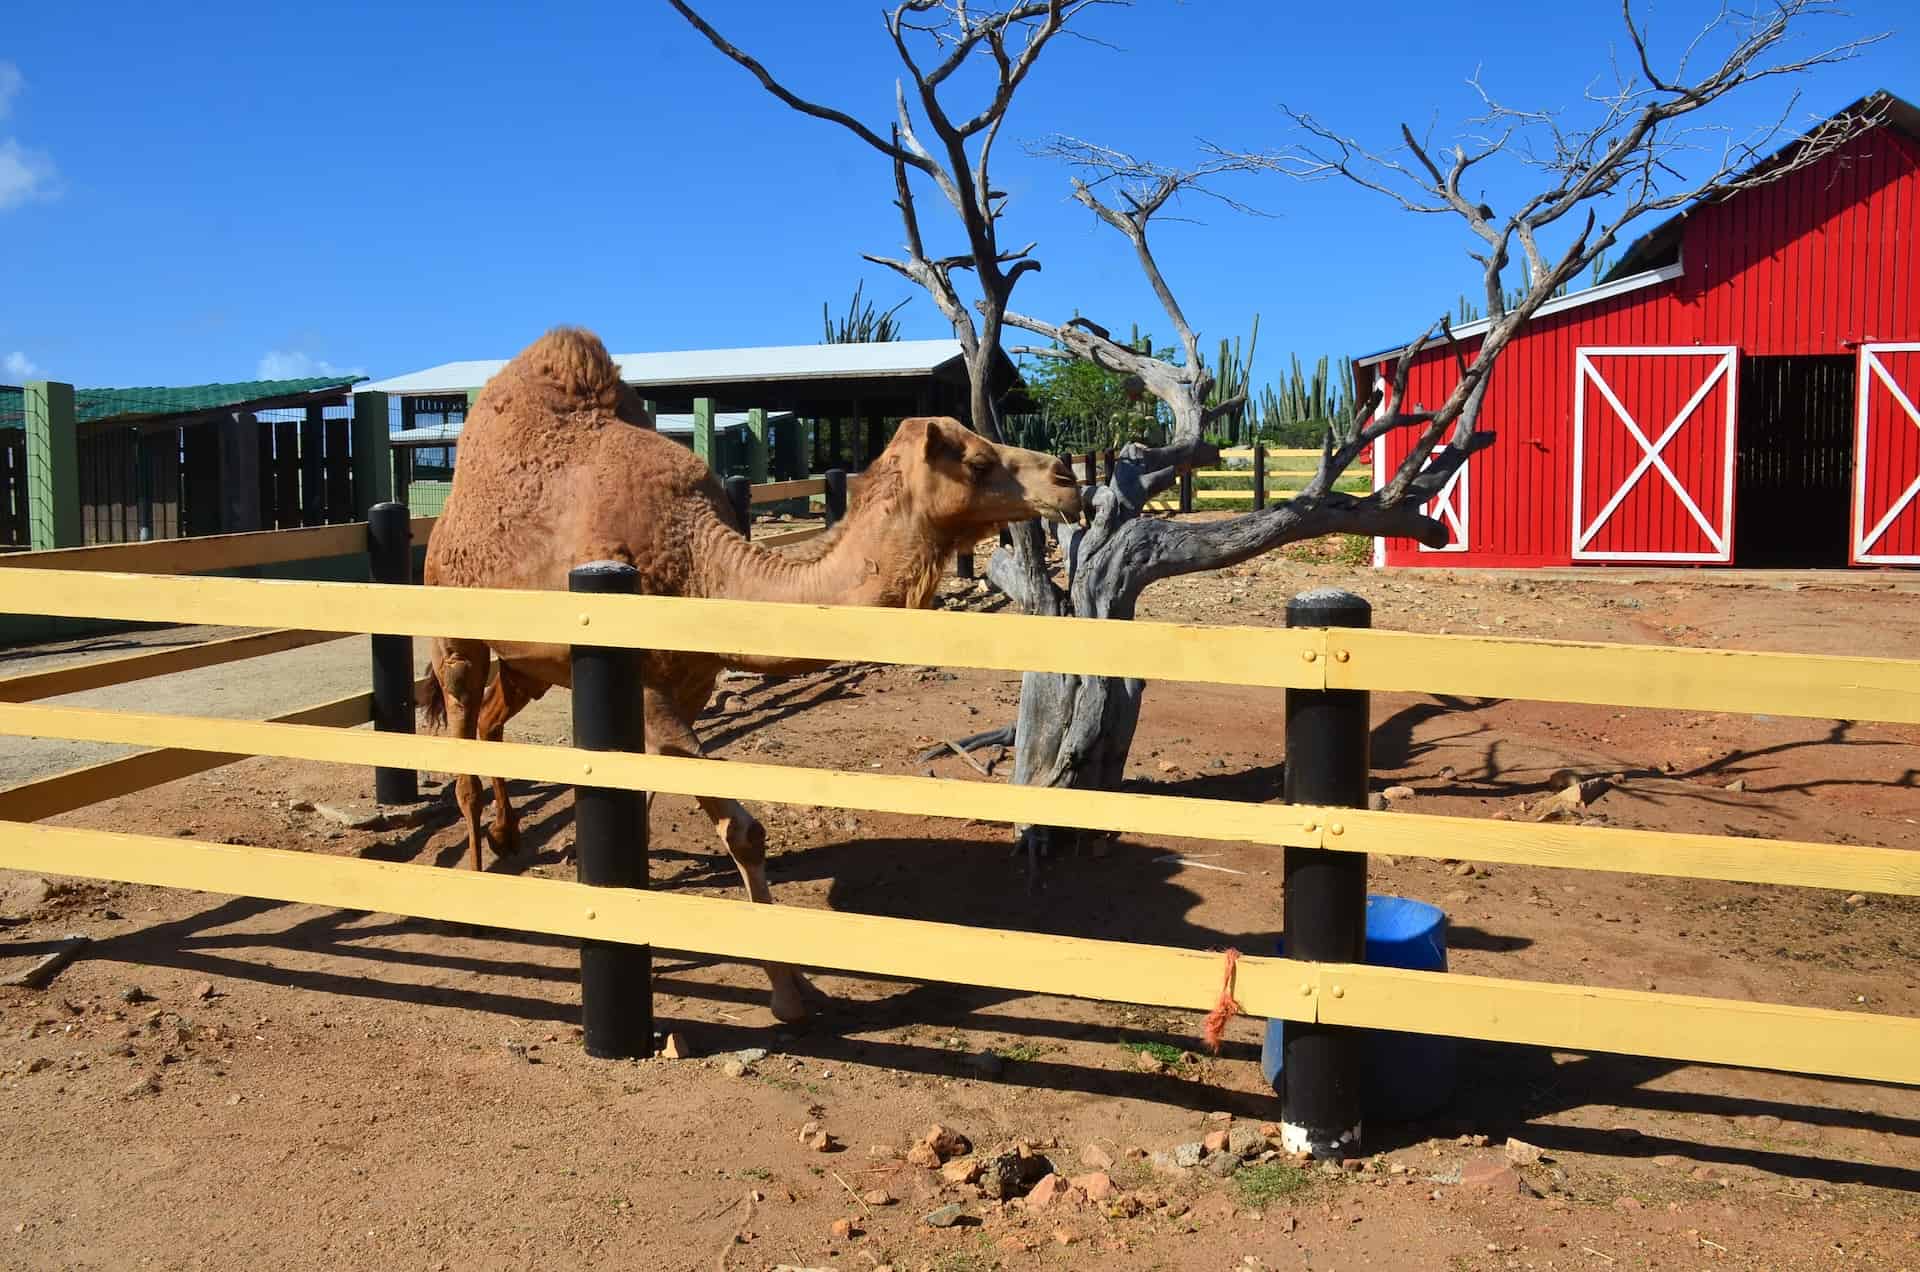 Camel at Philip's Animal Garden in Noord, Aruba